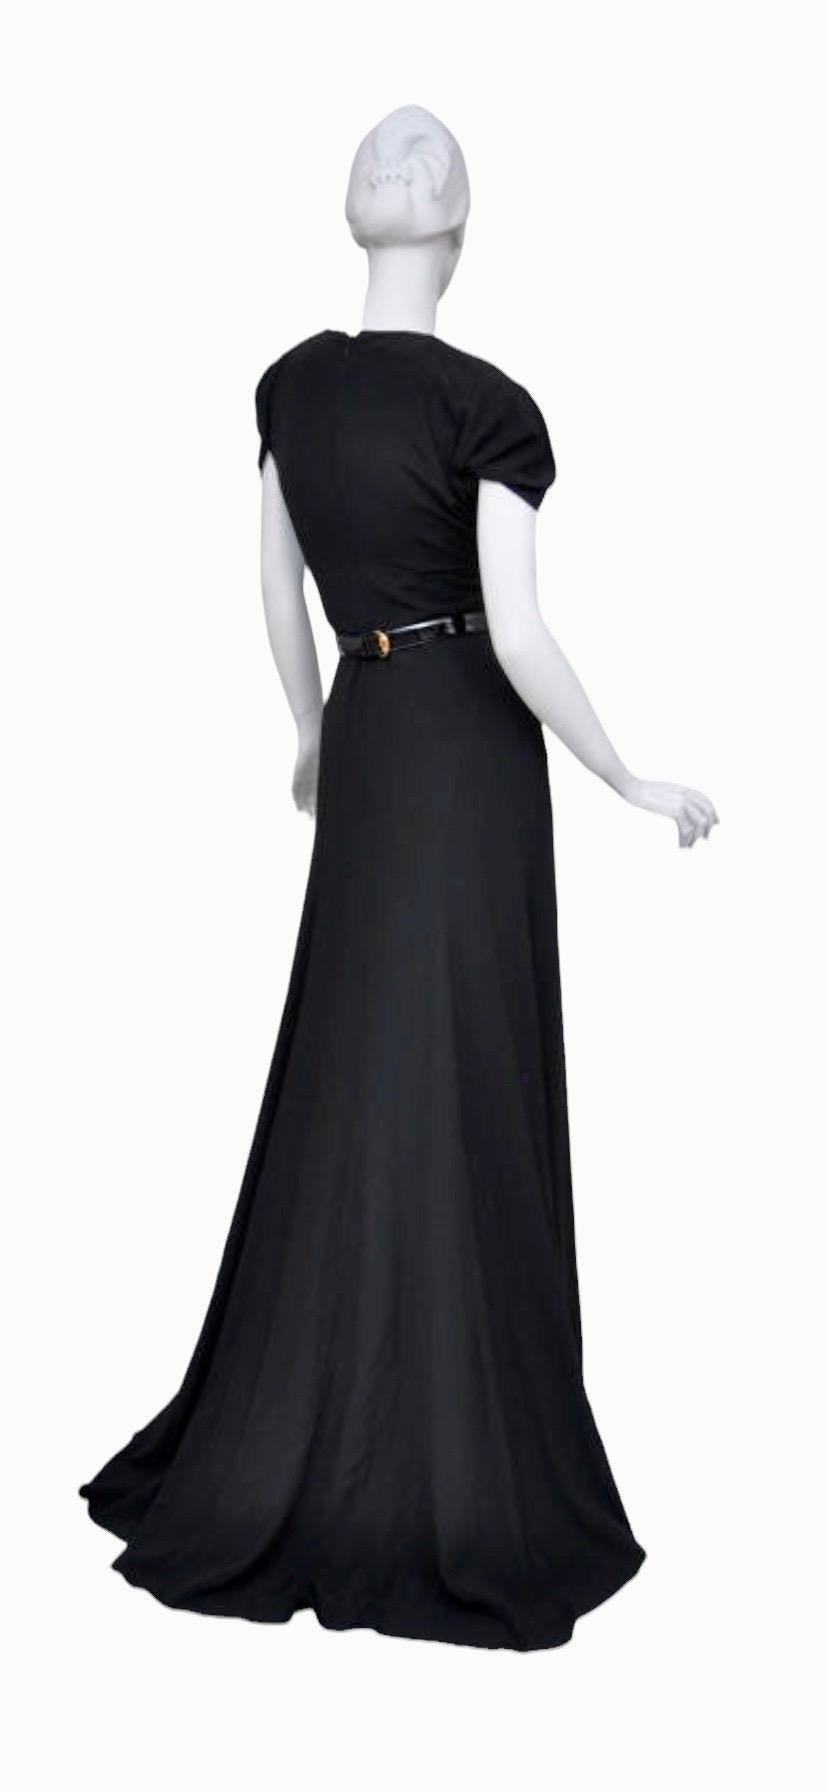 gucci black dress with belt